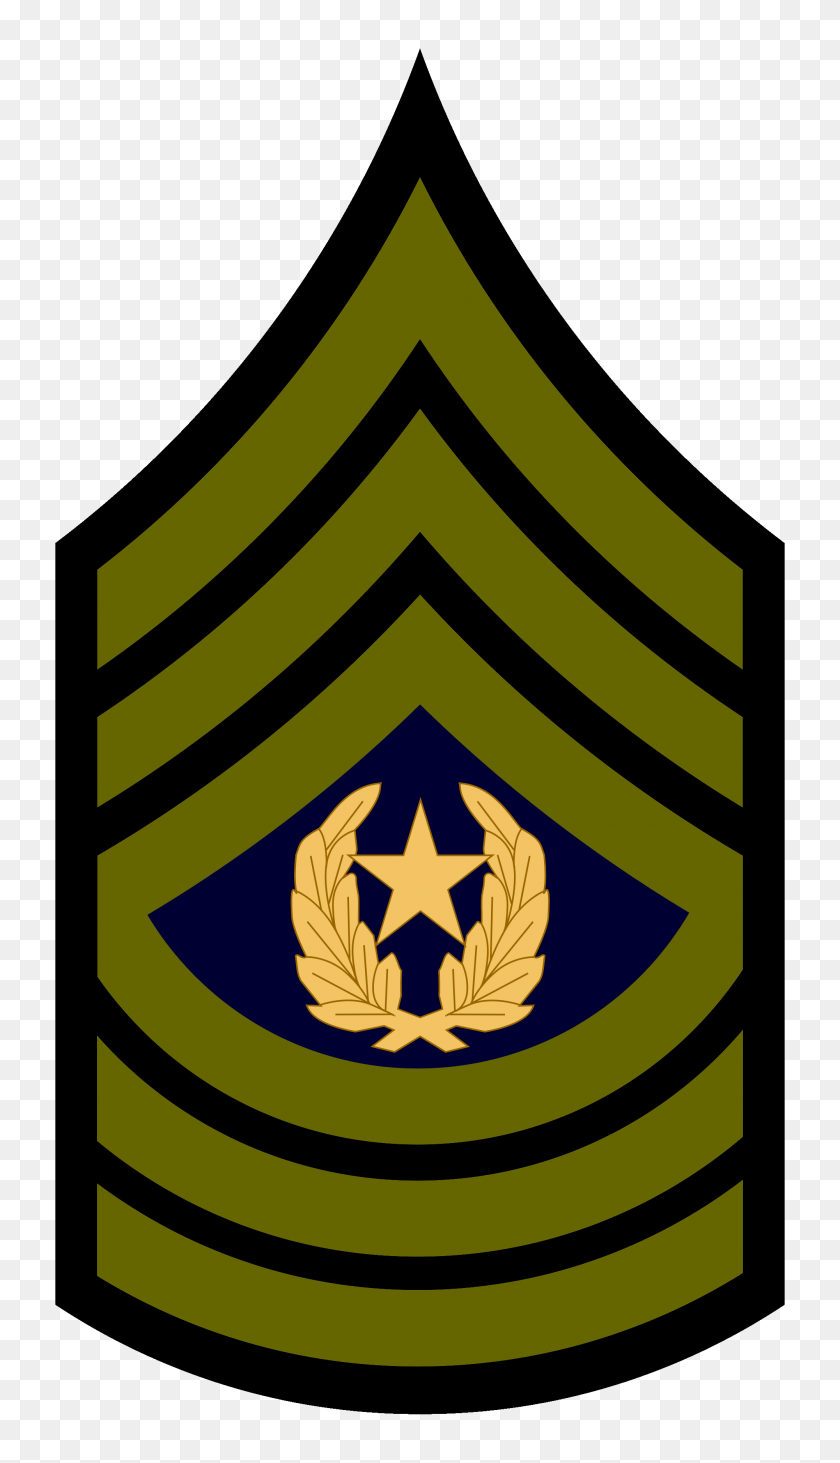 2000x3600 Армейский Ранг Csm Png Прозрачные Изображения Армейского Ранга Csm - Логотип Армии Png